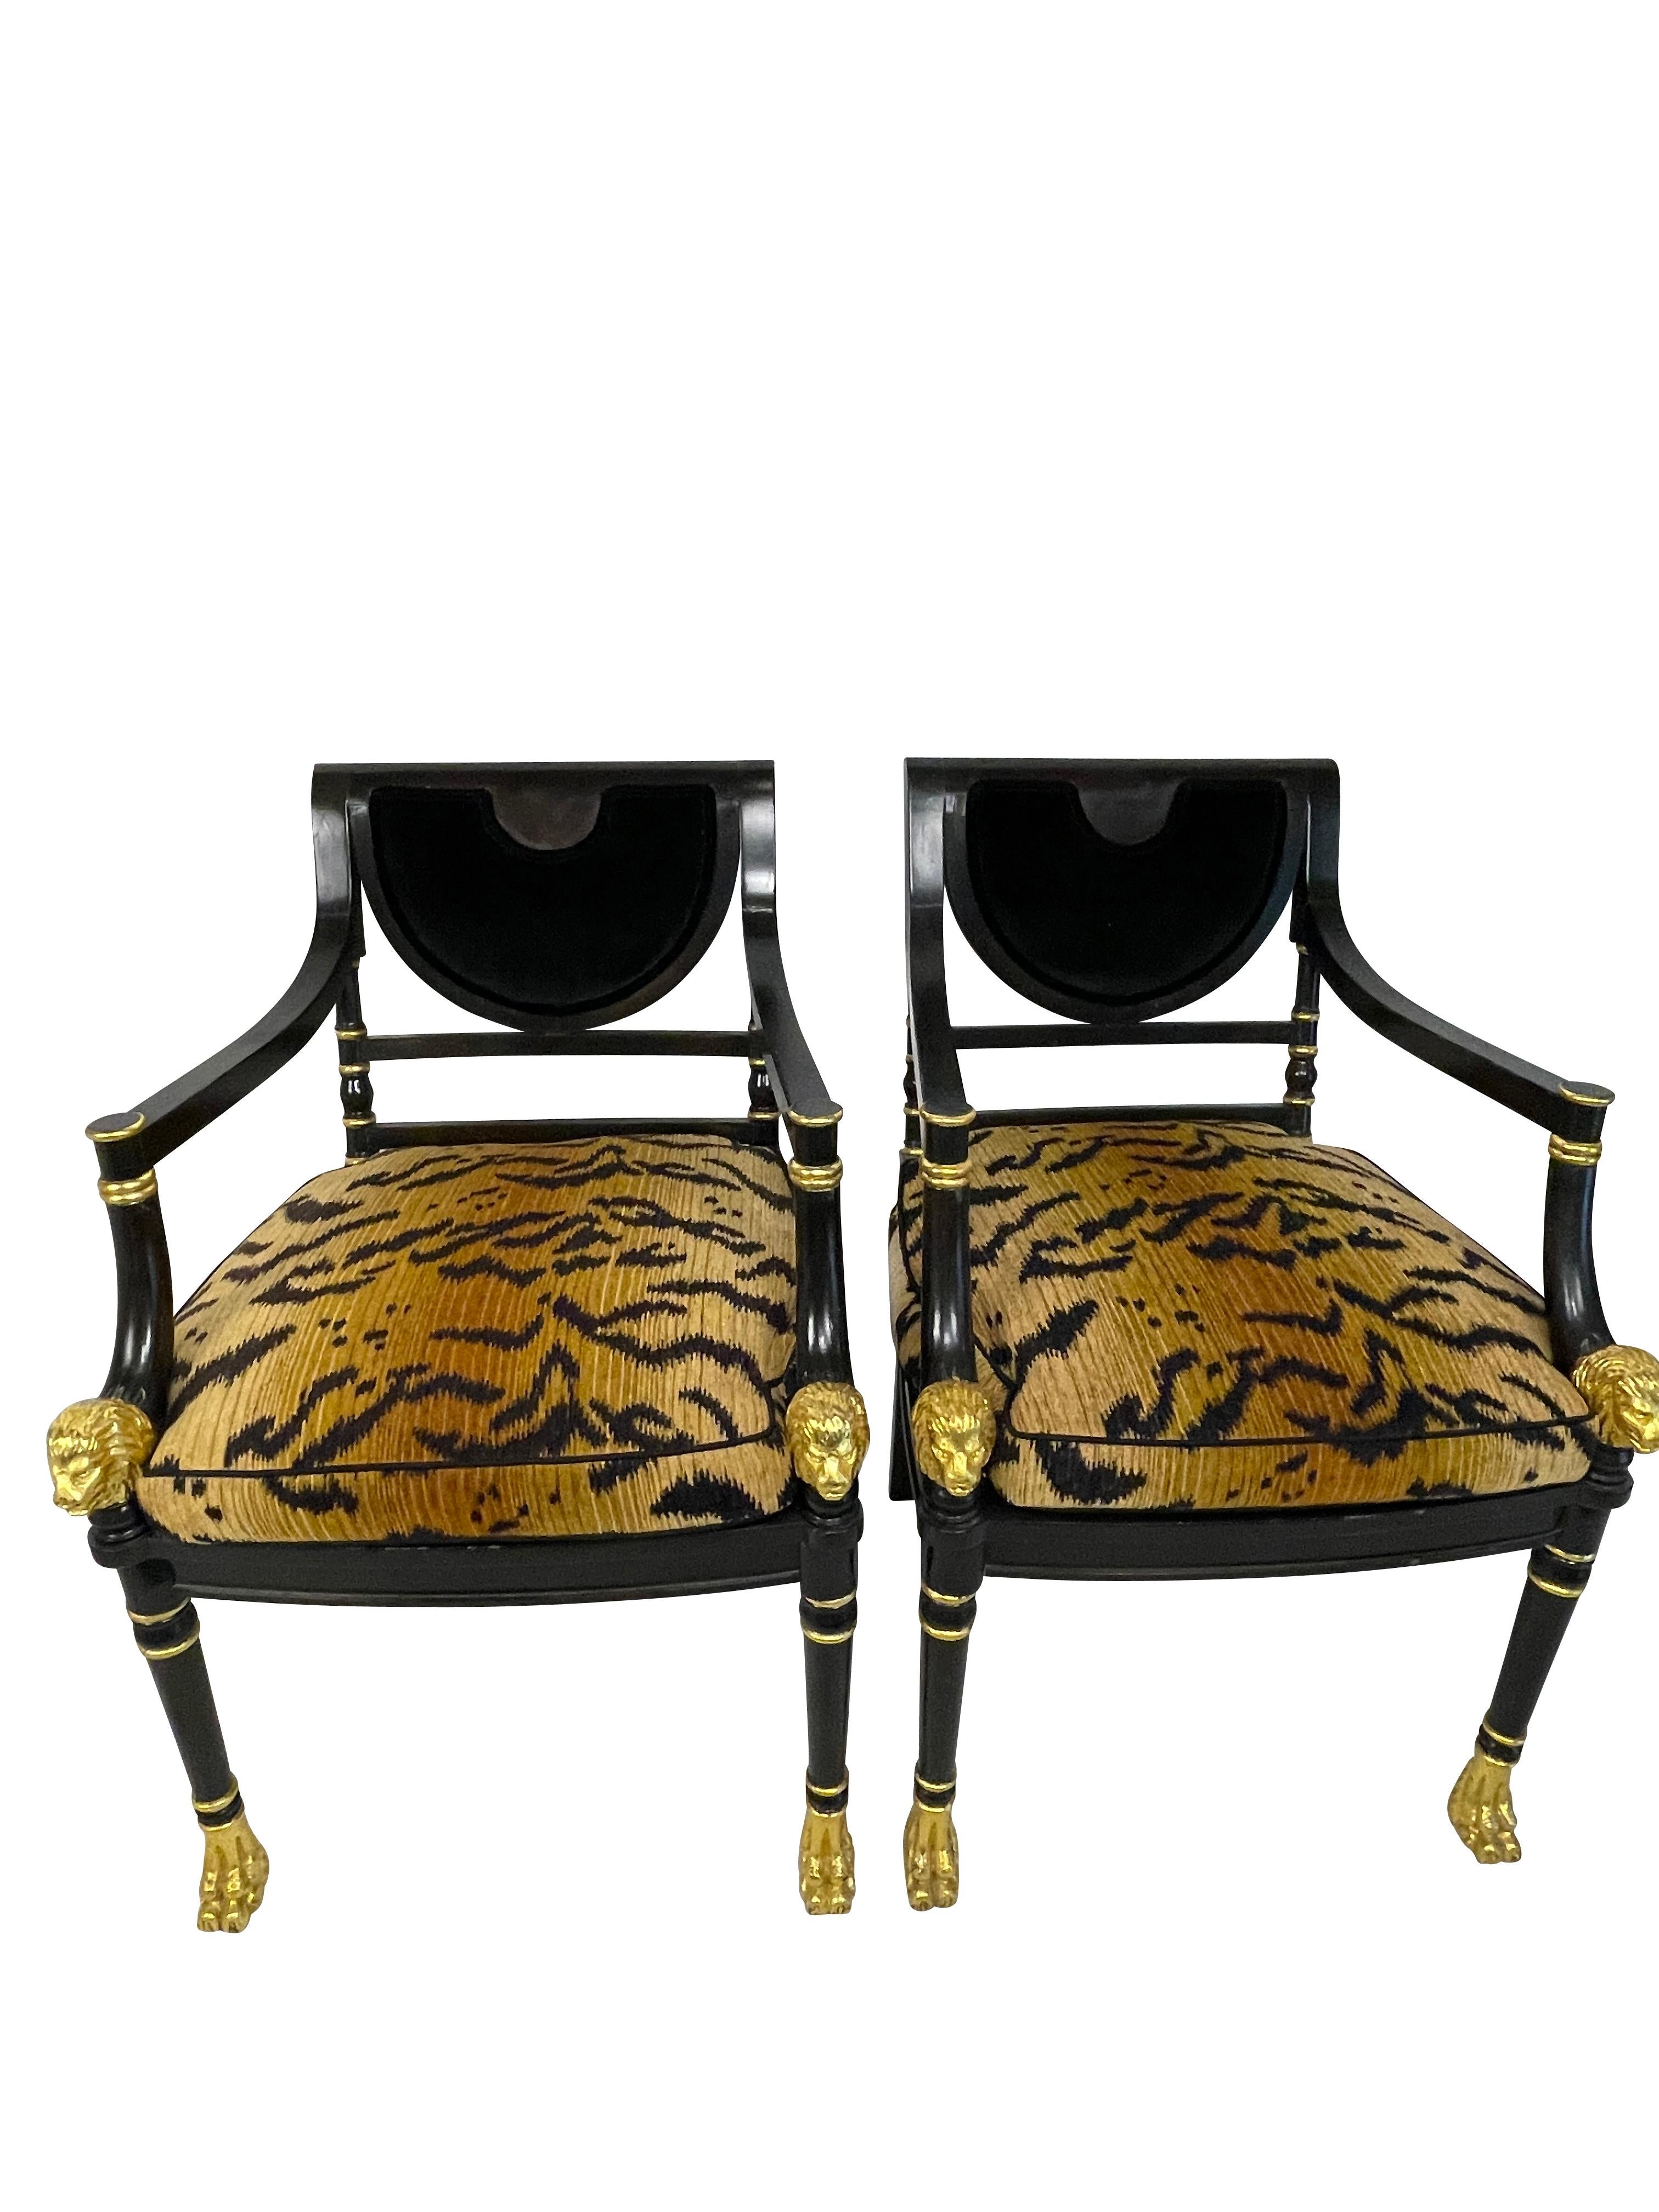 Wood Regency Style Black Ebonized and Gilt Decorated Chairs with Animal Print Cushion